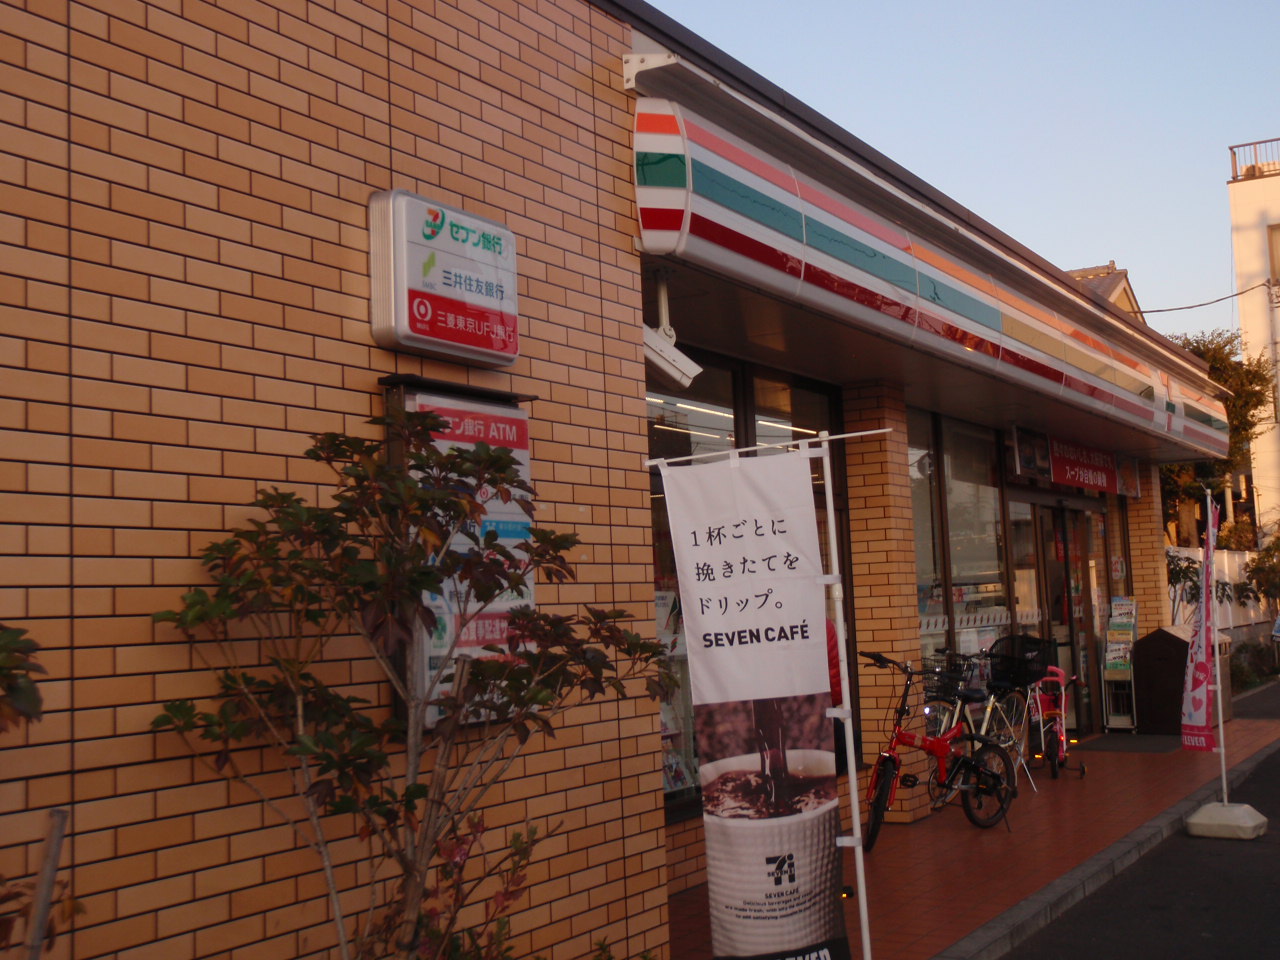 Convenience store. Seven-Eleven Nishikoiwa 3-chome up (convenience store) 300m